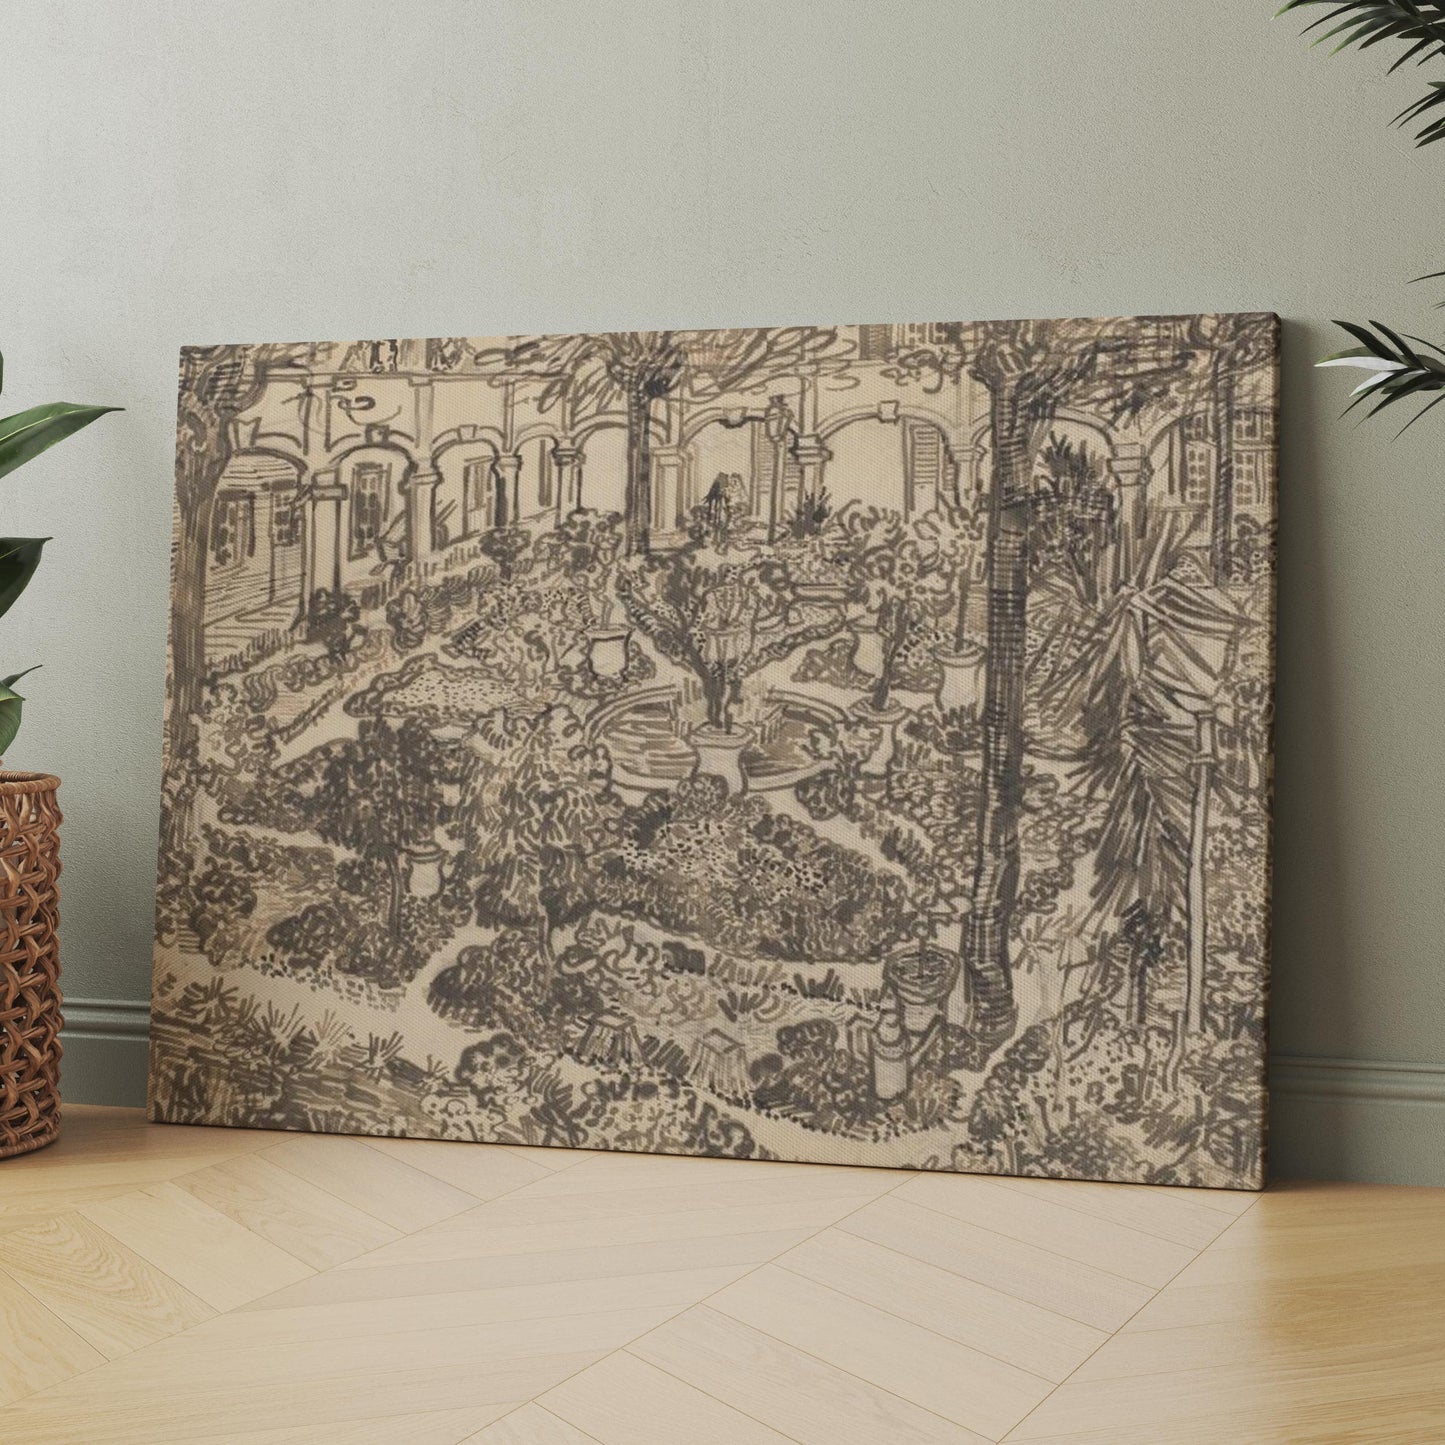 Garden of the Hospital (1889) by Van Gogh